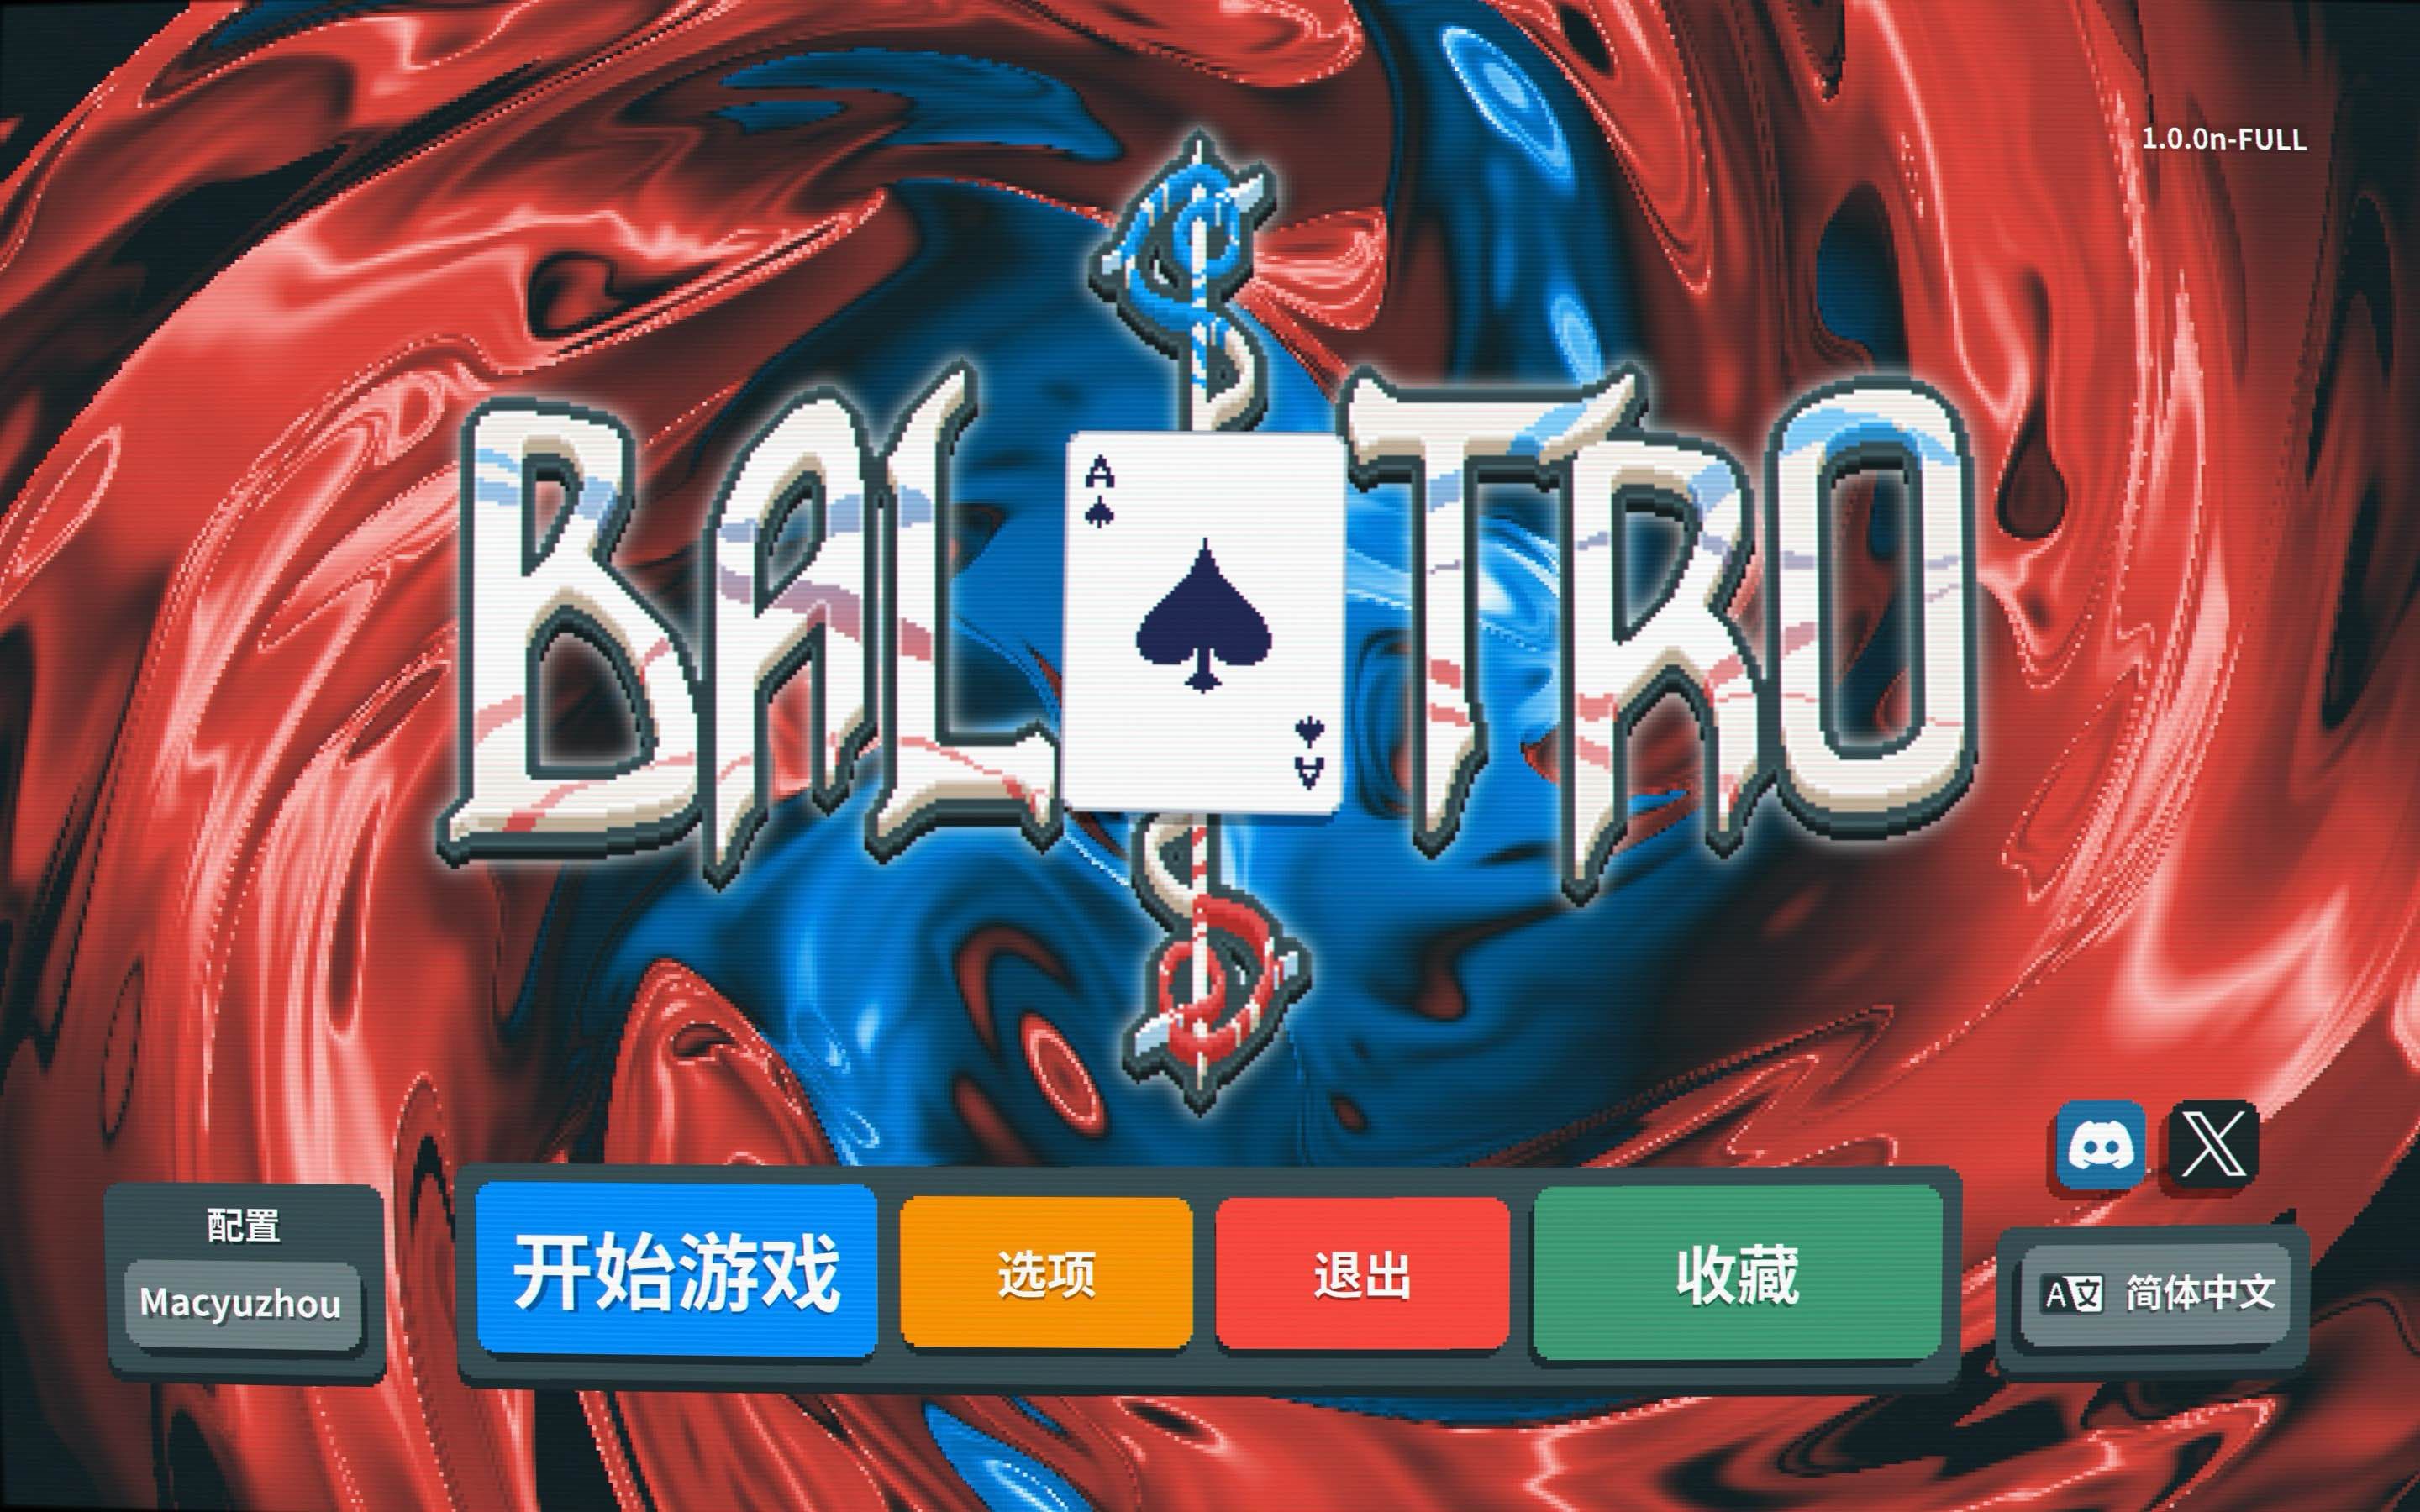 小丑牌 for Mac Balatro v1.0.0n 中文原生版